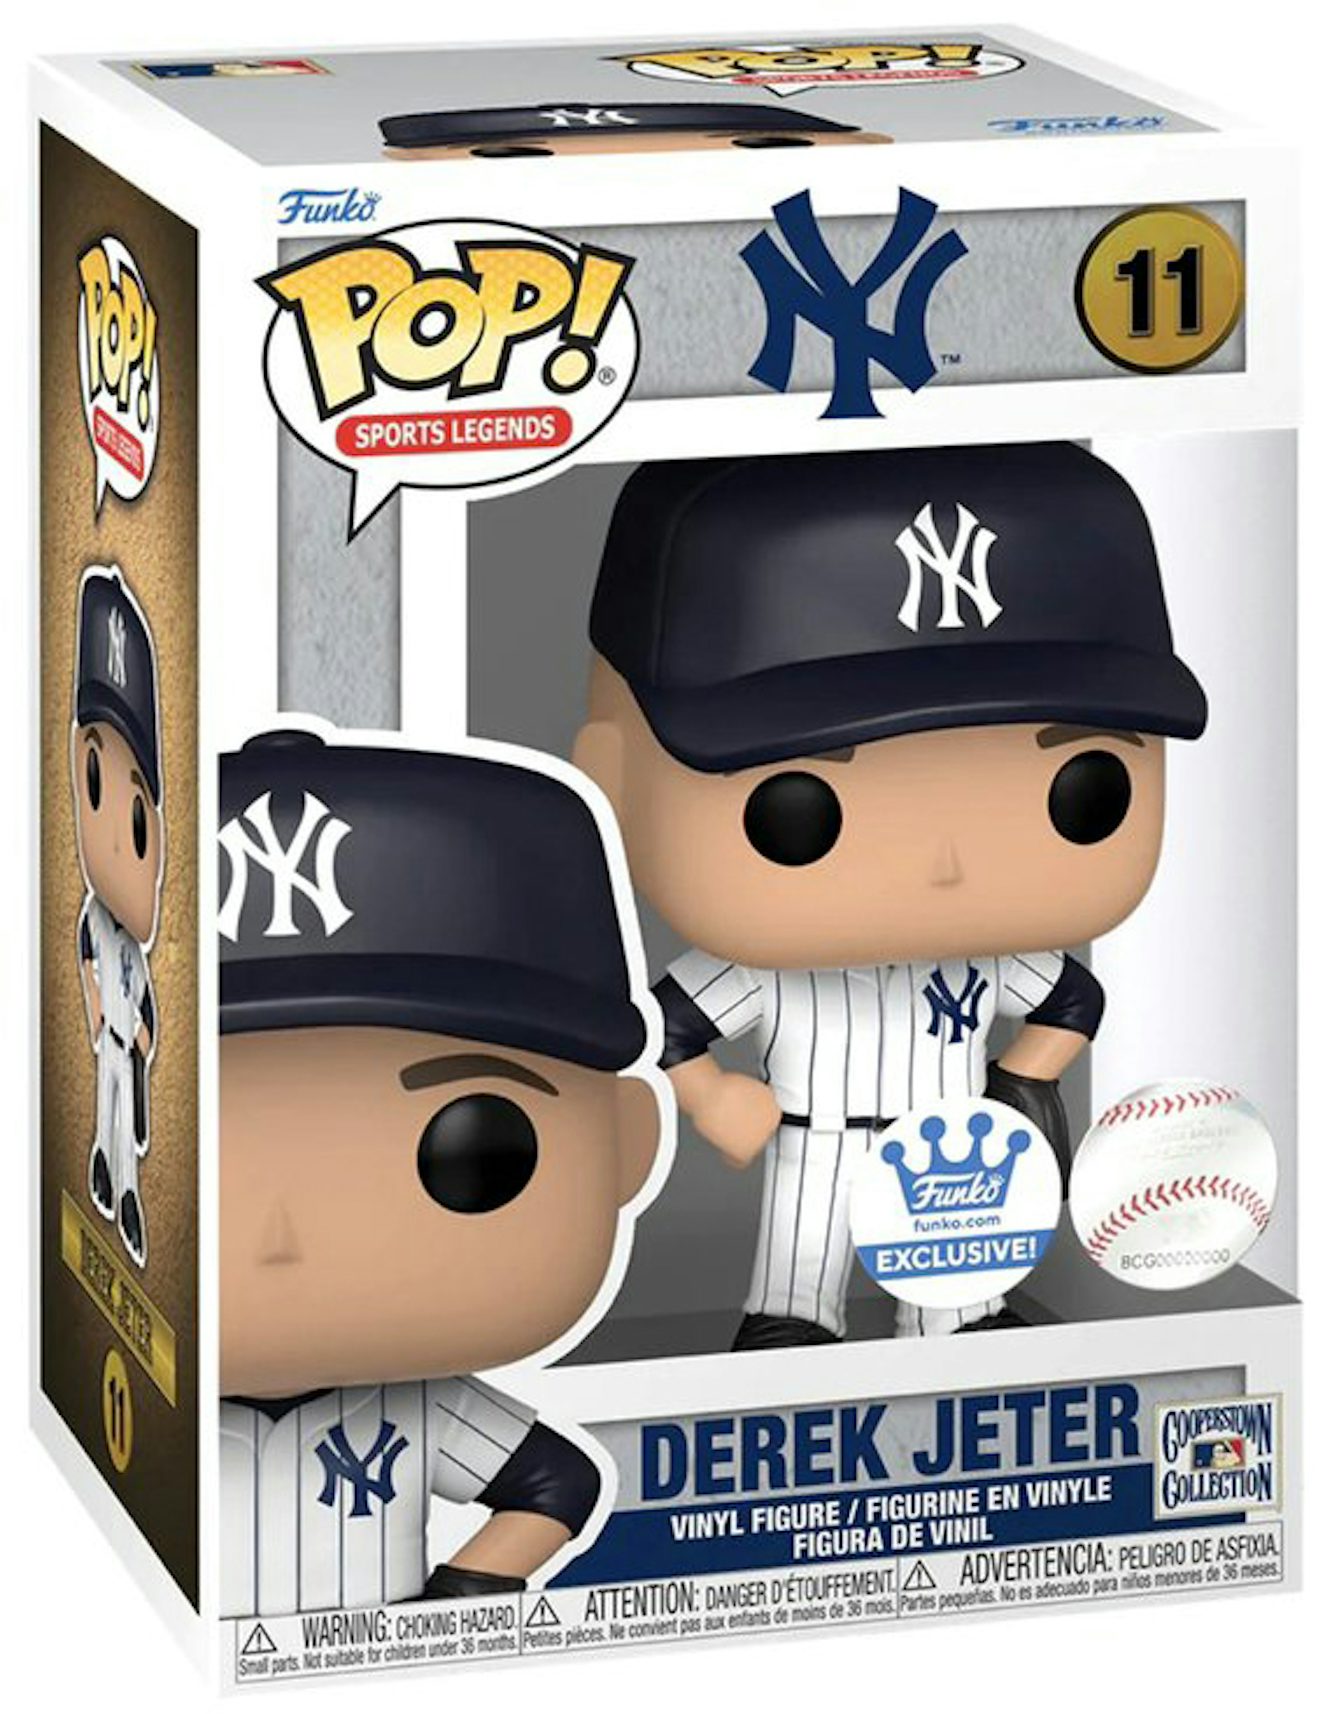 Now Available: Funko Pop! Derek Jeter New York Yankees (Fanatics Exclusive)  — Sneaker Shouts